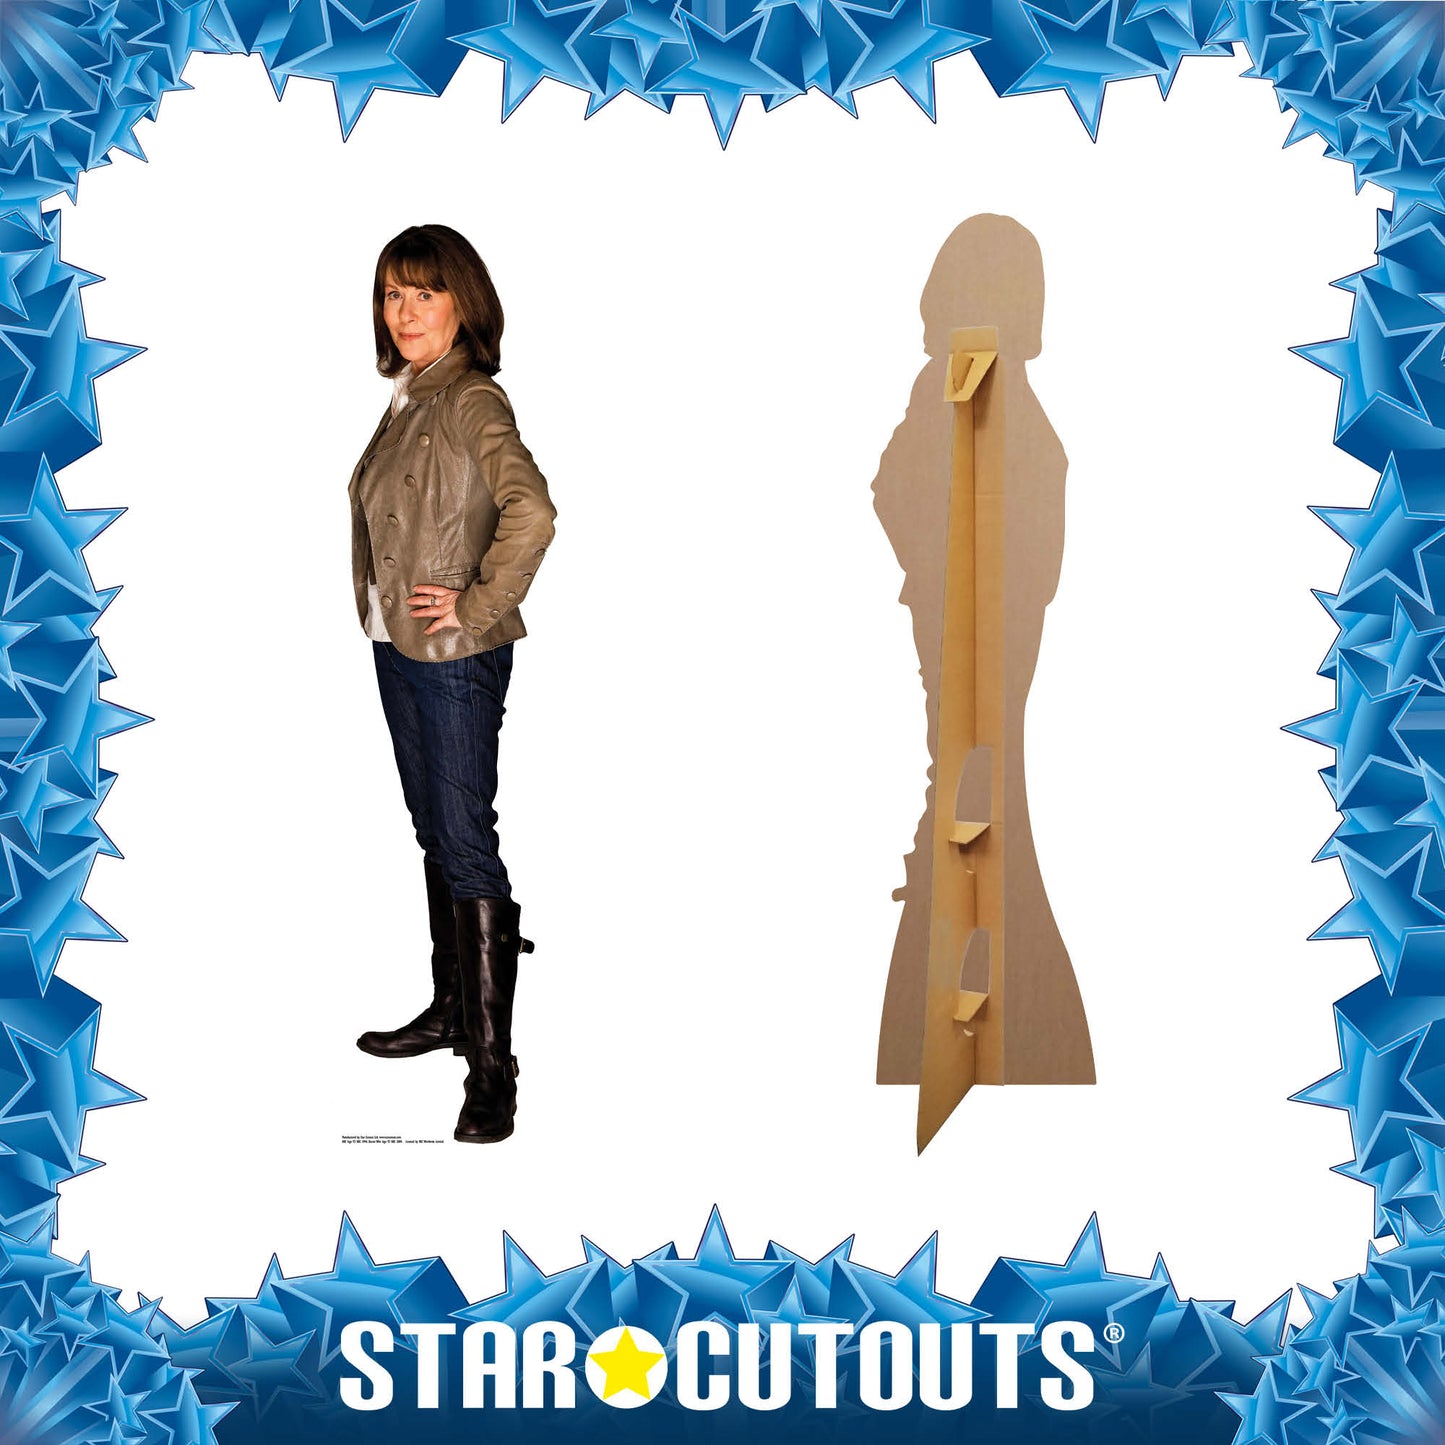 Sarah Jane Smith Cardboard Cut Out Height 162cm - Star Cutouts